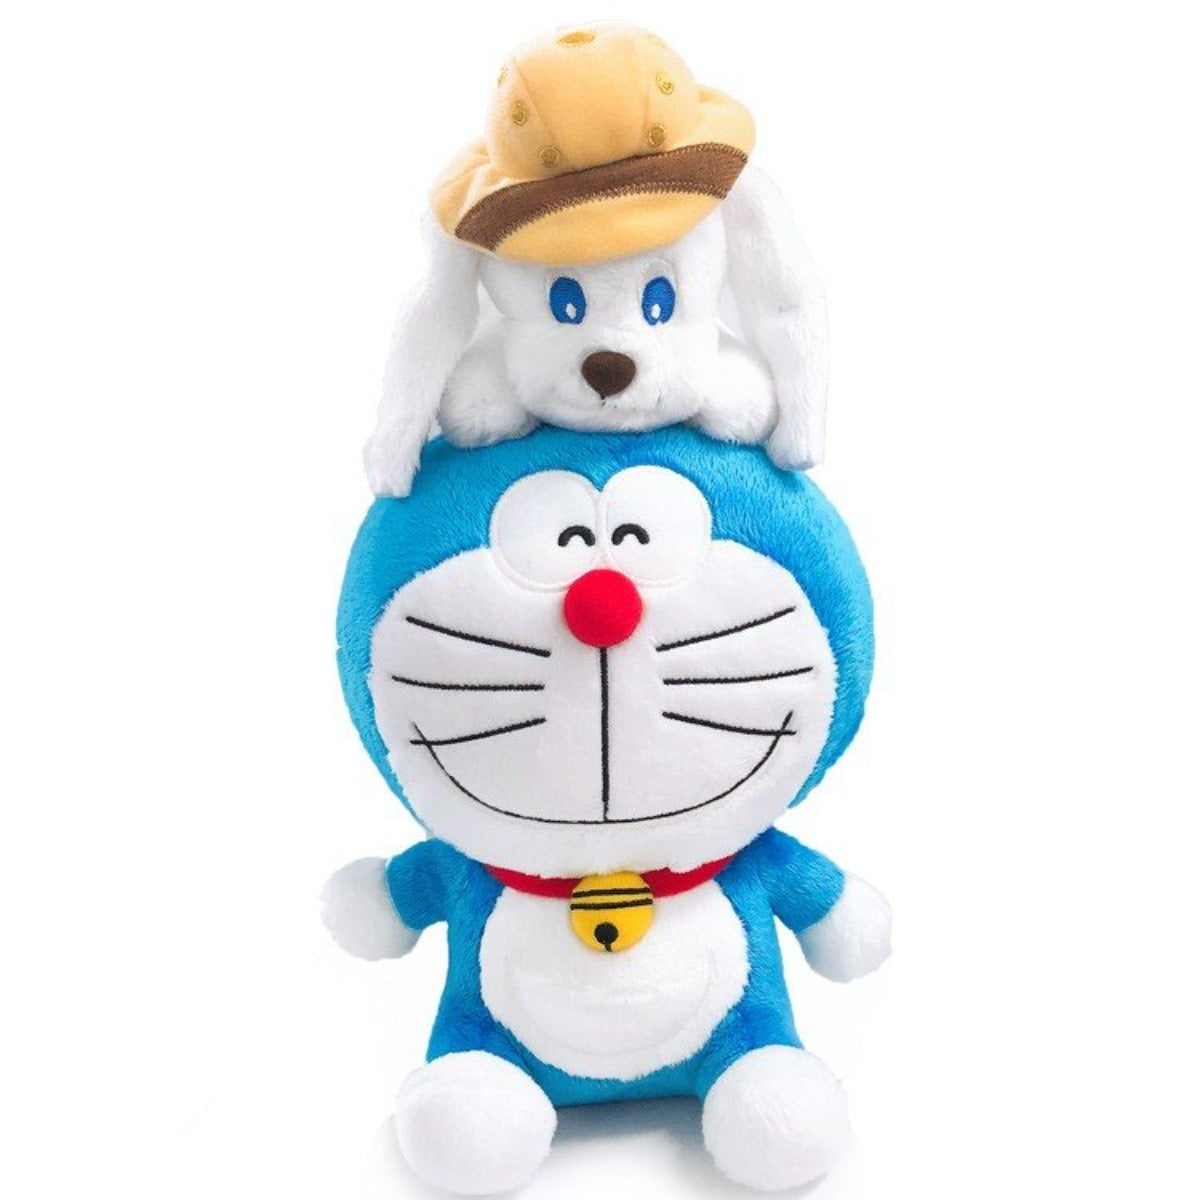 Plush Doraemon with White Dog